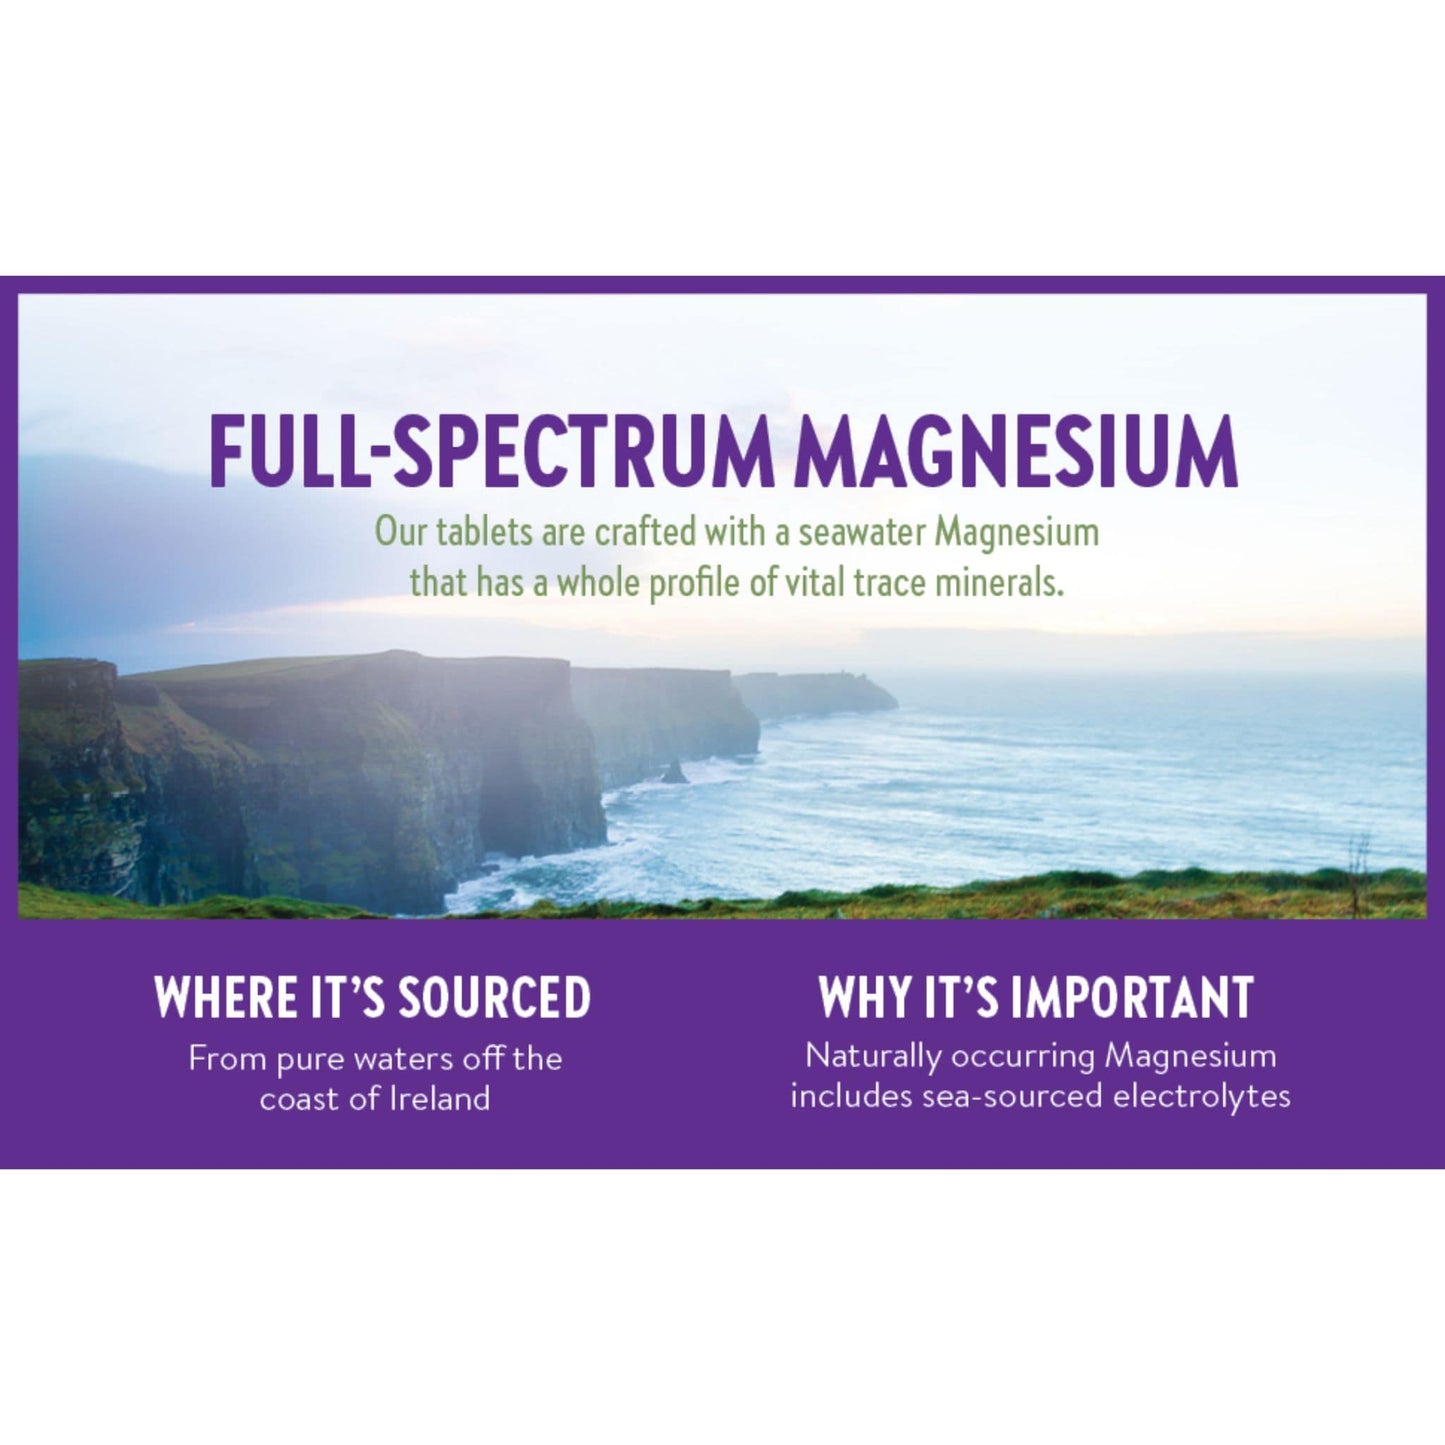 30 Tablets | New Chapter Magnesium Plus Senenium and Zinc Infographic